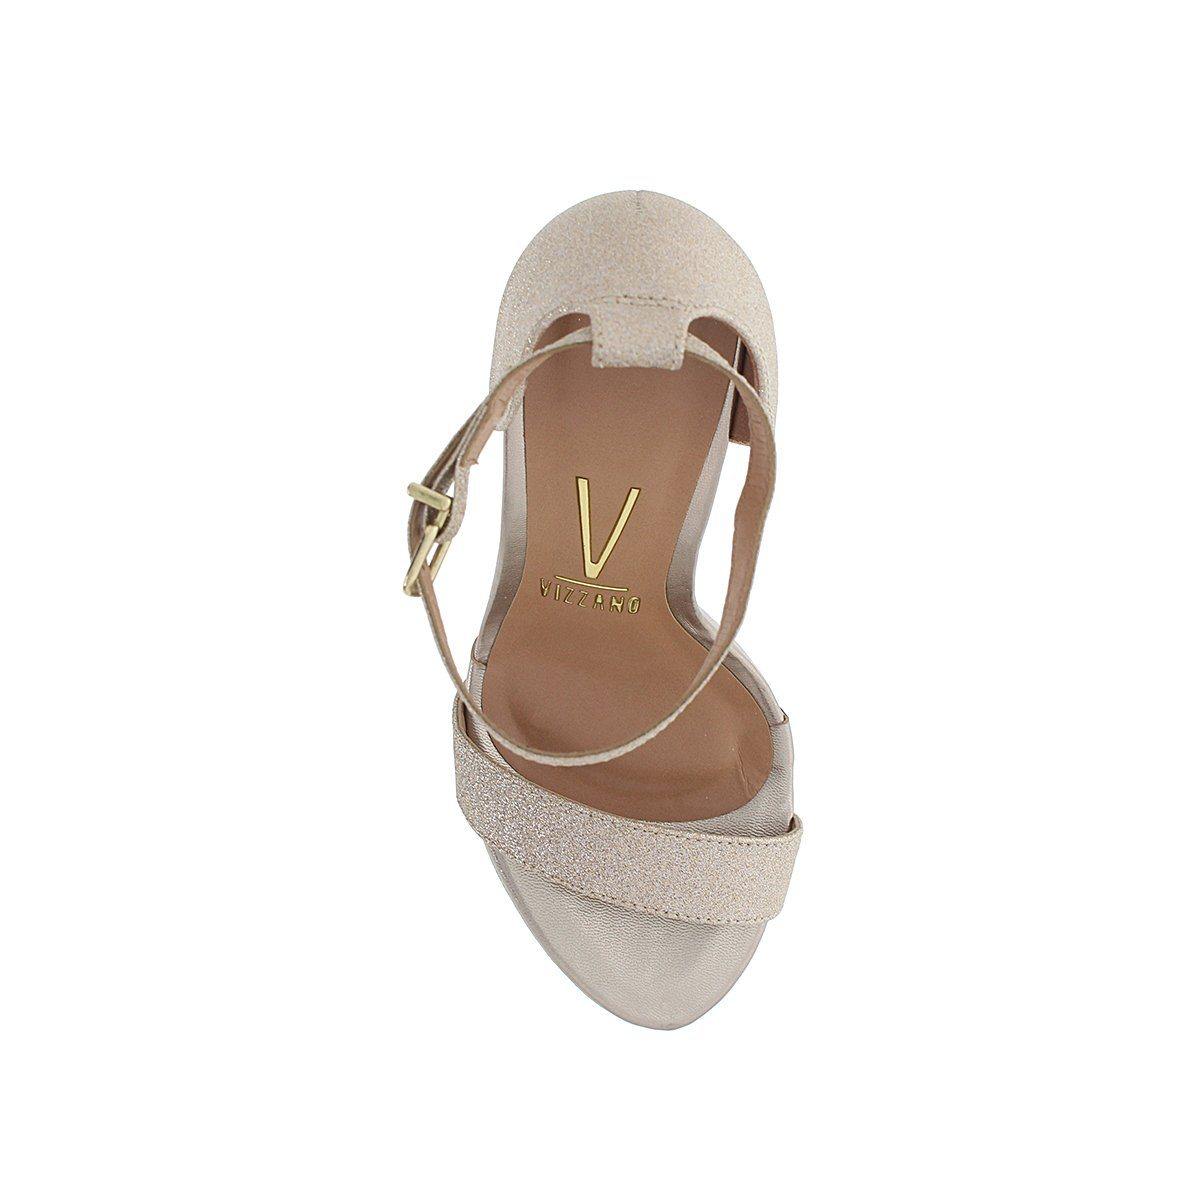 Vizzano 6278-104 High Heel Sandal in Gold Shimmer